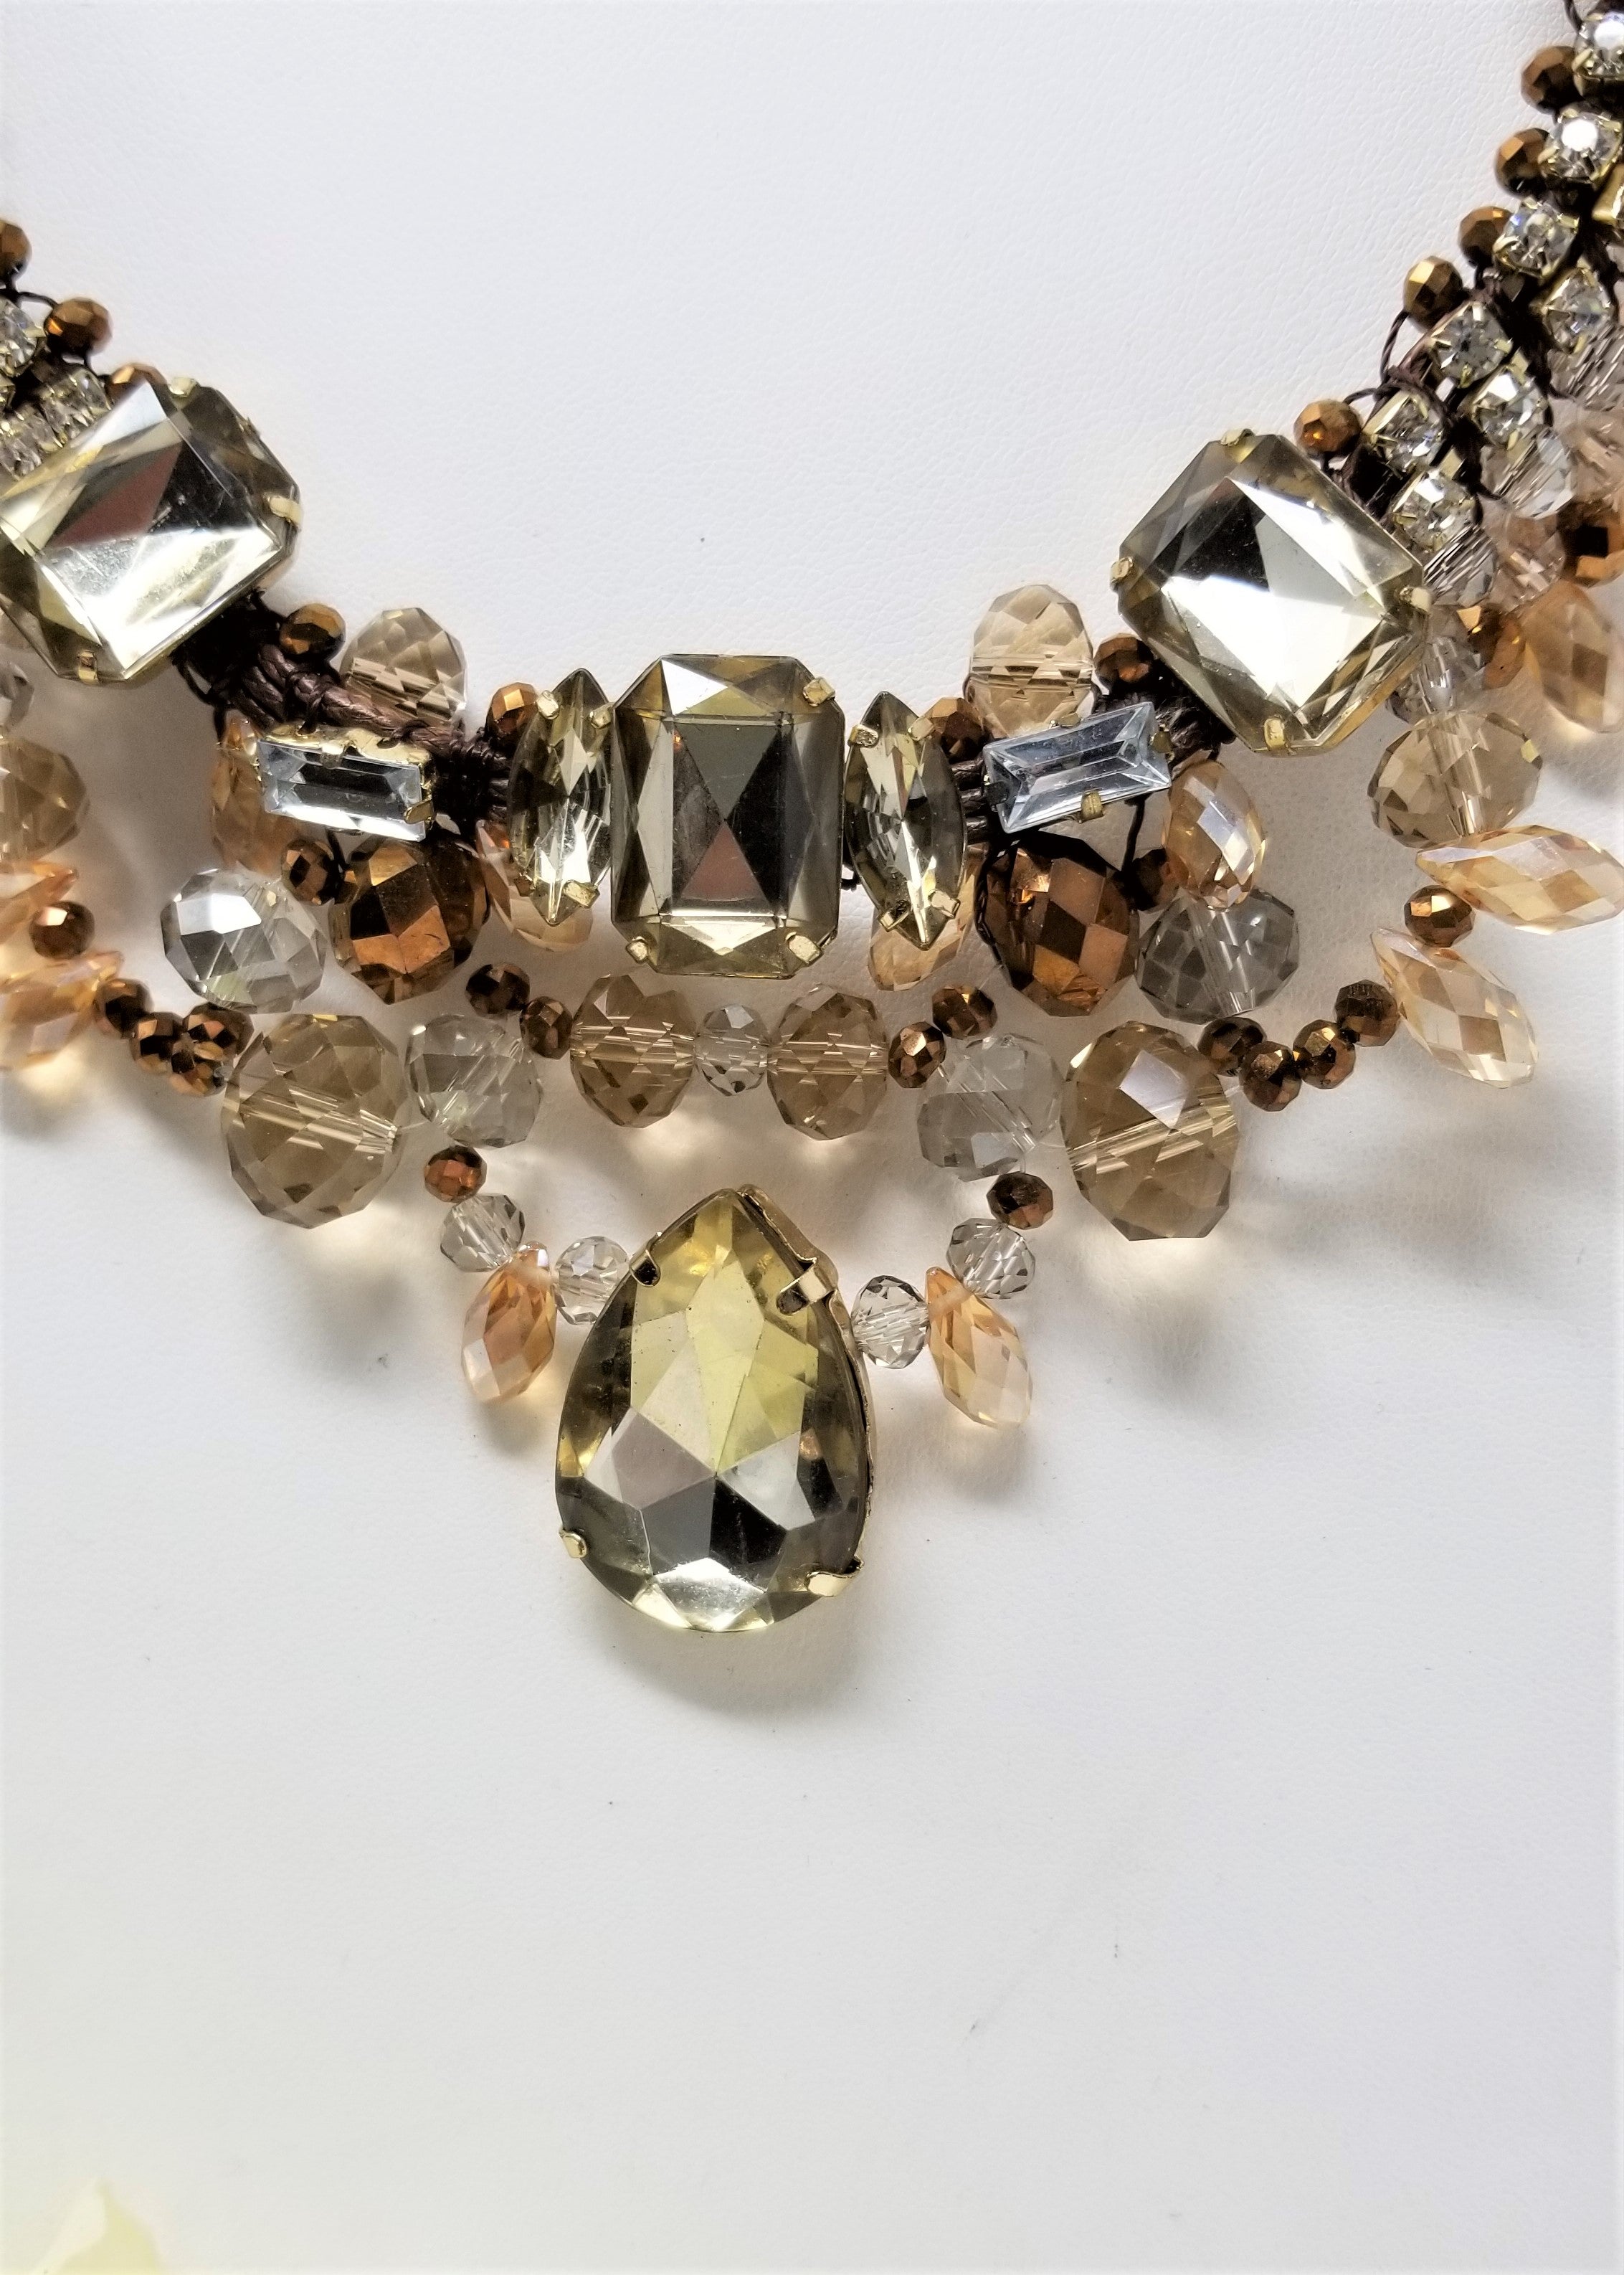 Stunning Rhinestone and Czech Glass Bead Statement Necklace